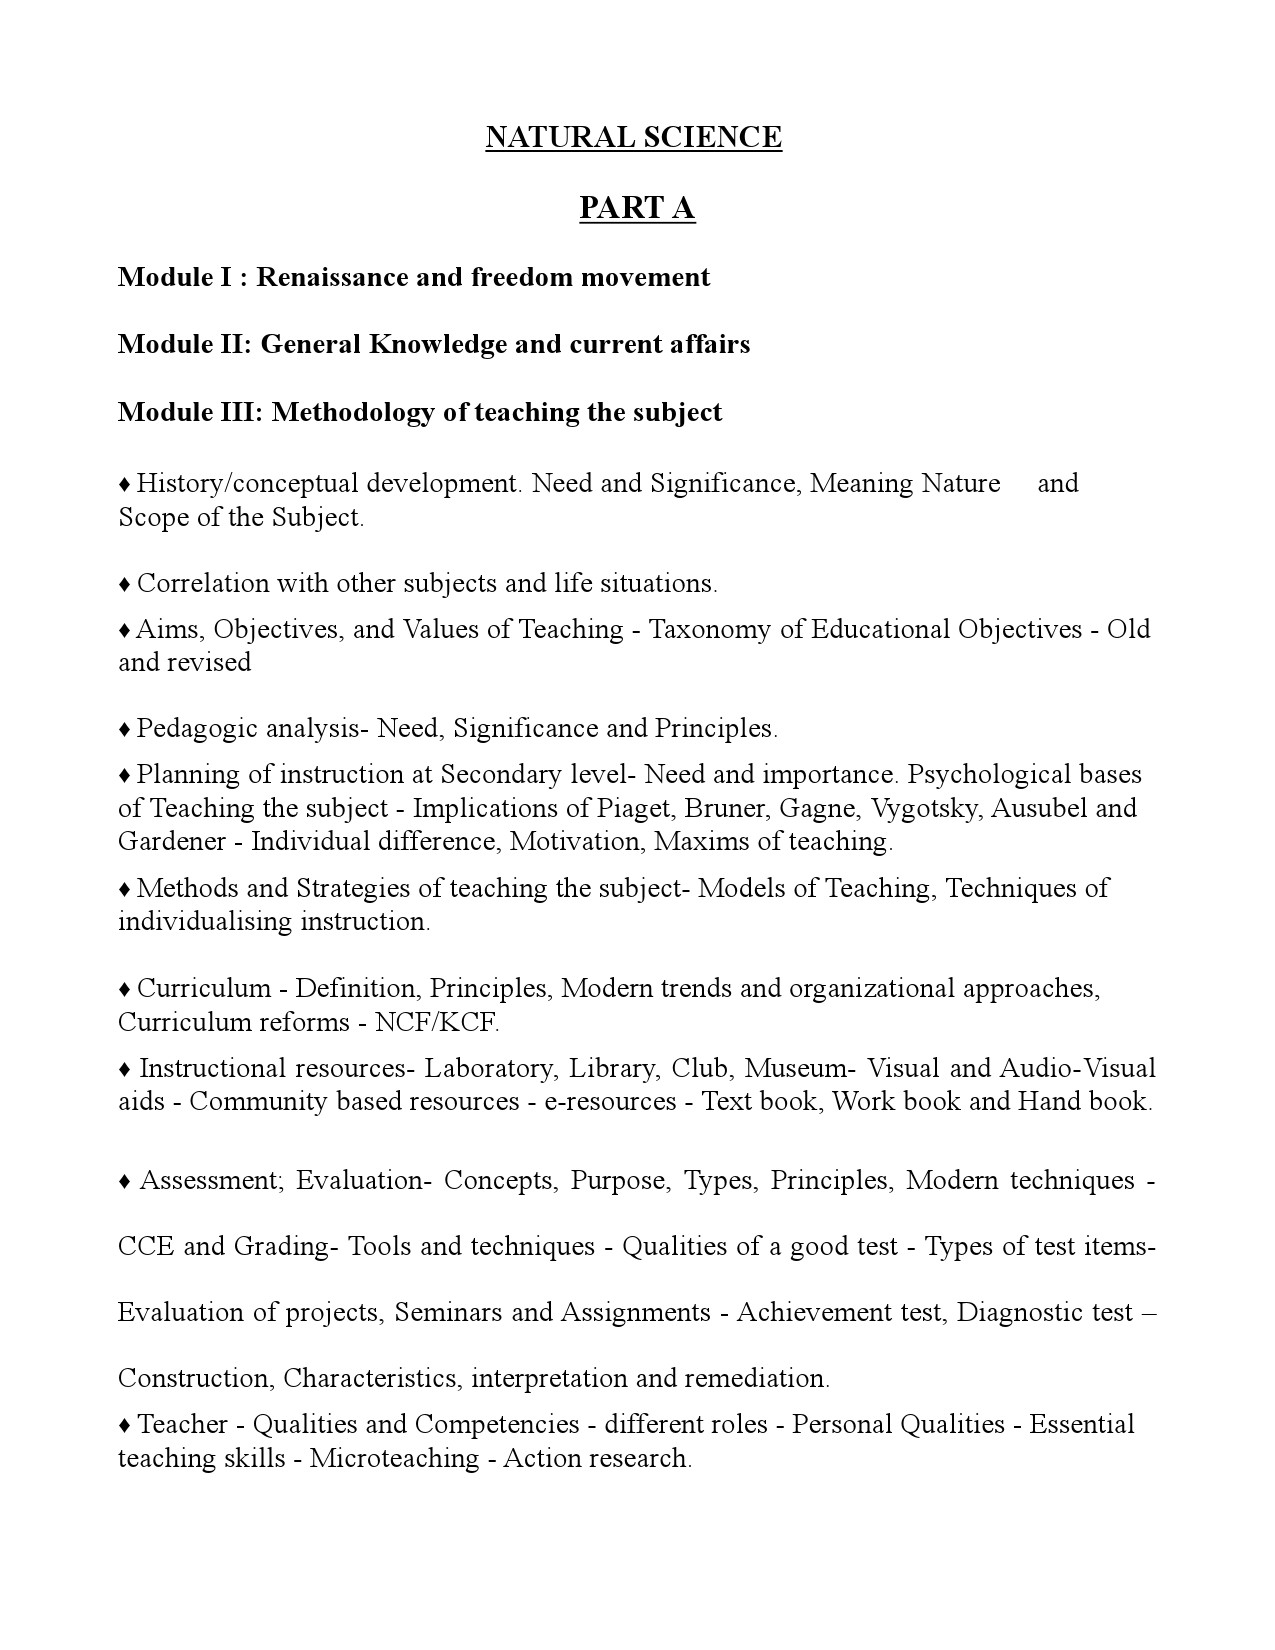 High School Assistant Natural Science Part A Kerala Examination Syllabus 2021 - Notification Image 1